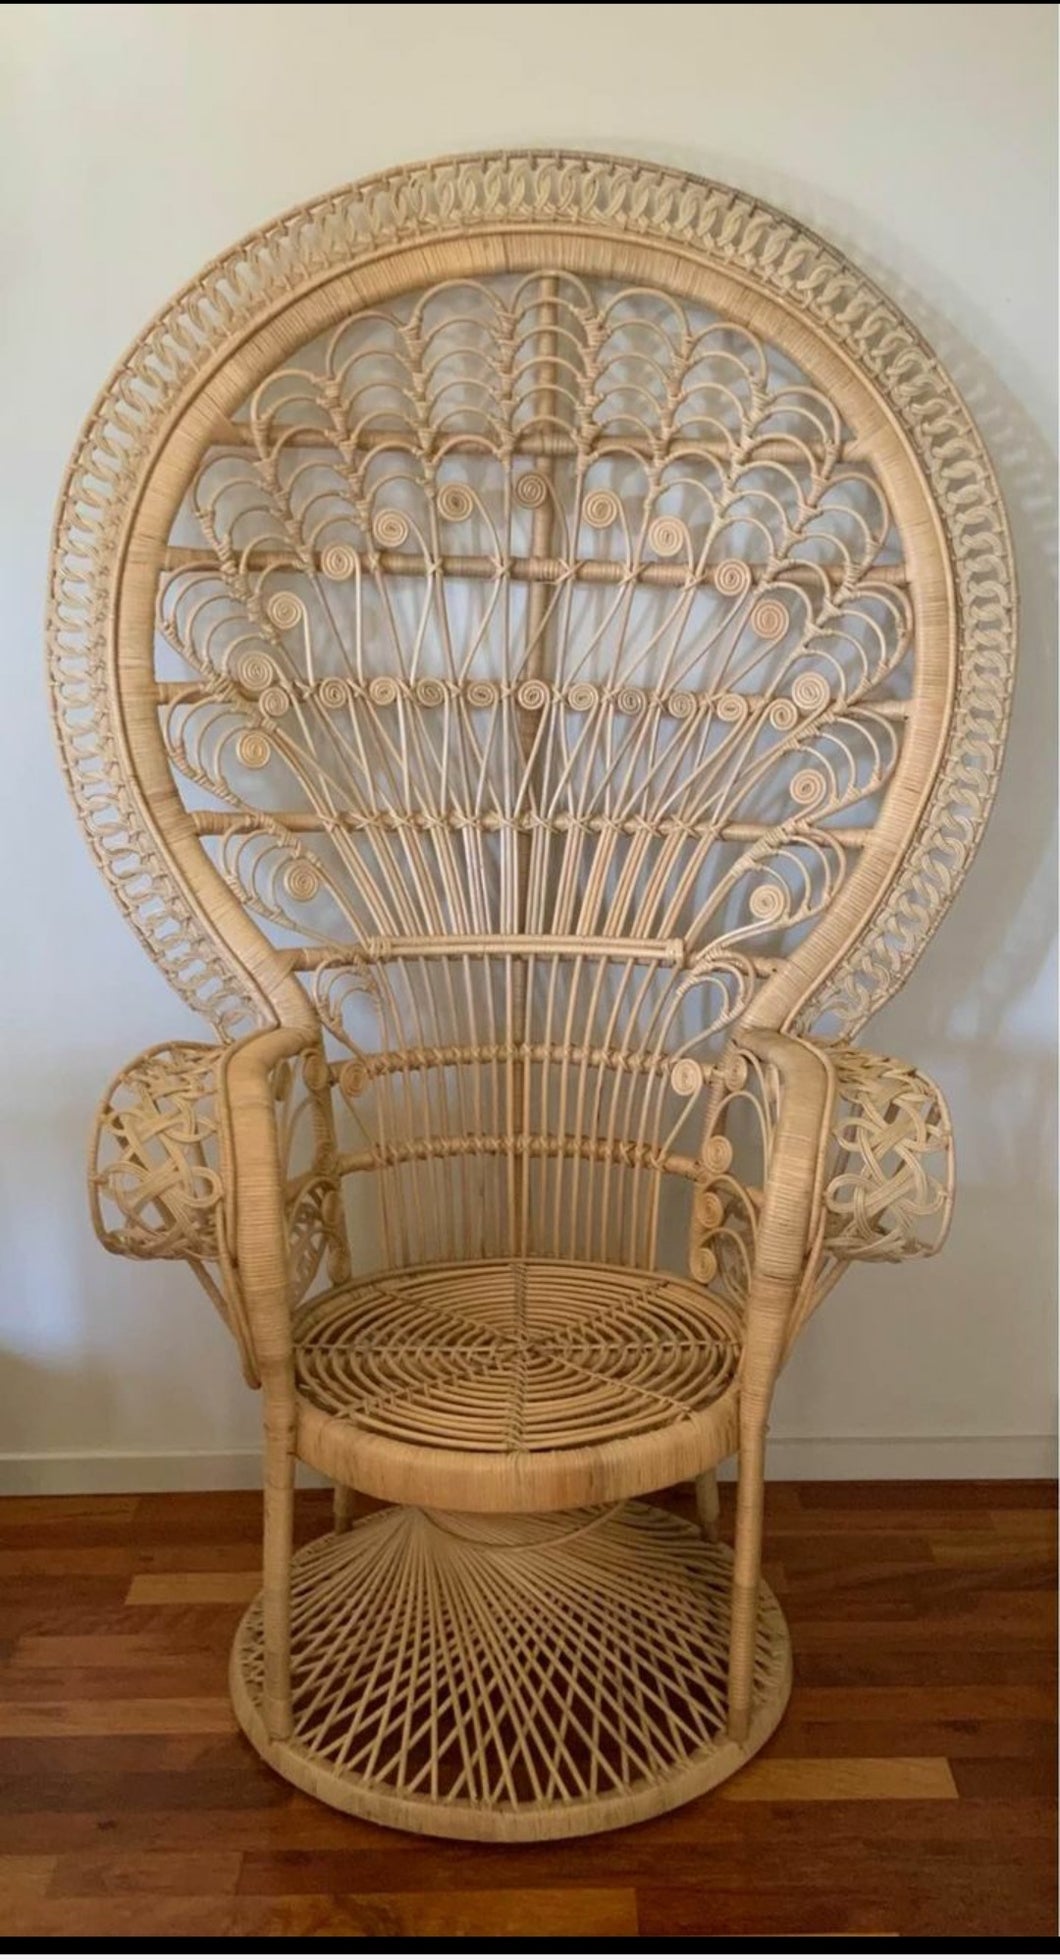 King Peacock Chair